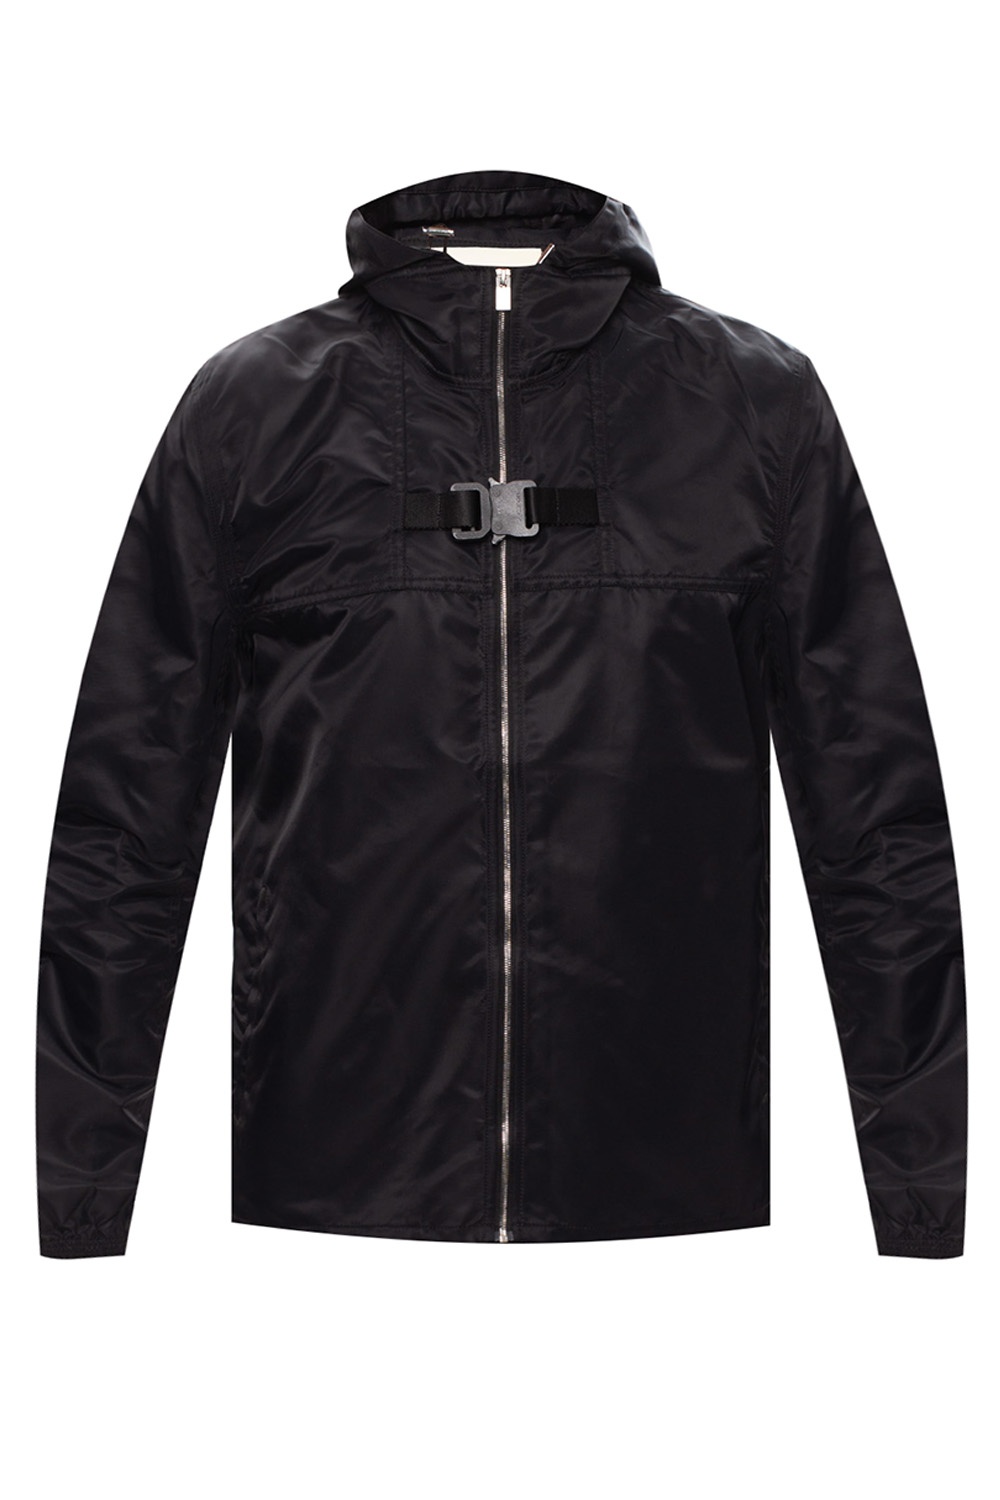 Black Jacket with signature buckle 1017 ALYX 9SM - Vitkac Canada